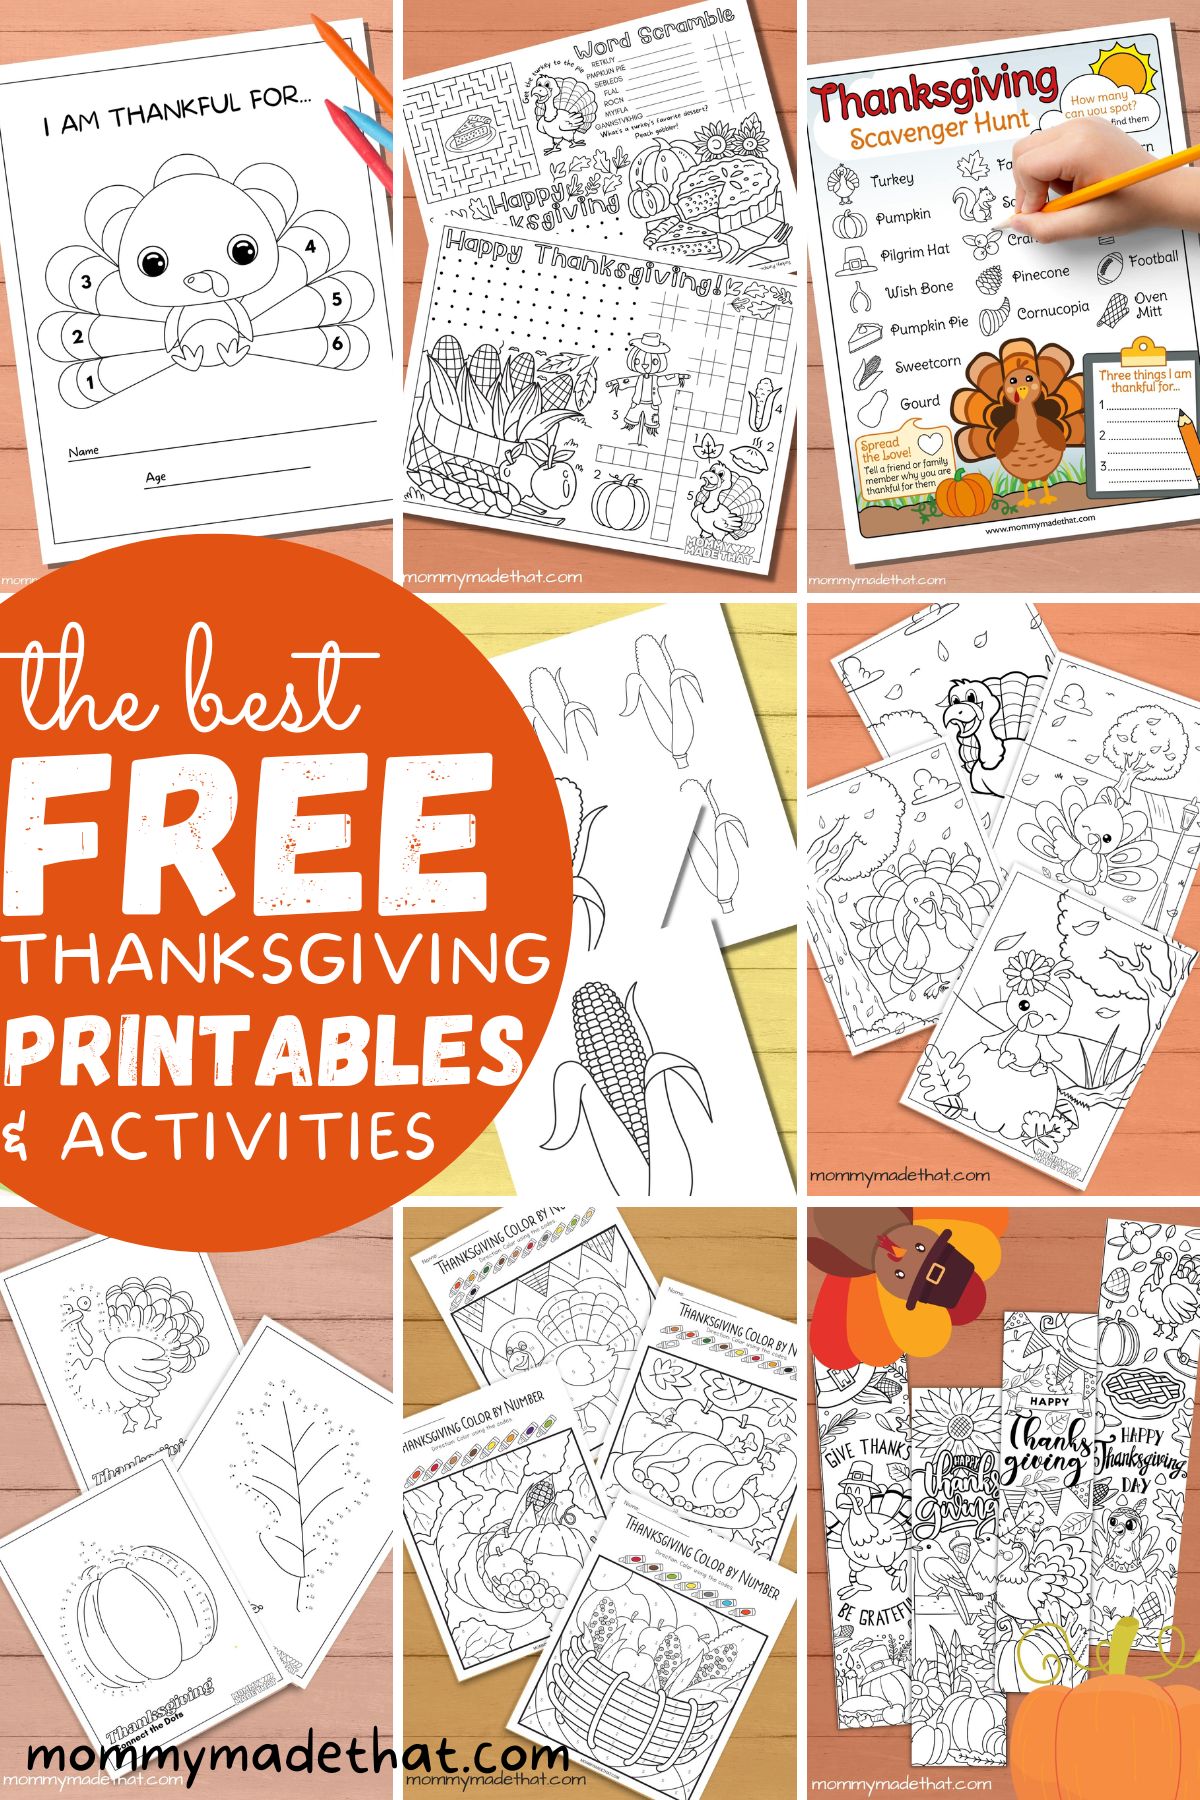 Free Thanksgiving printables